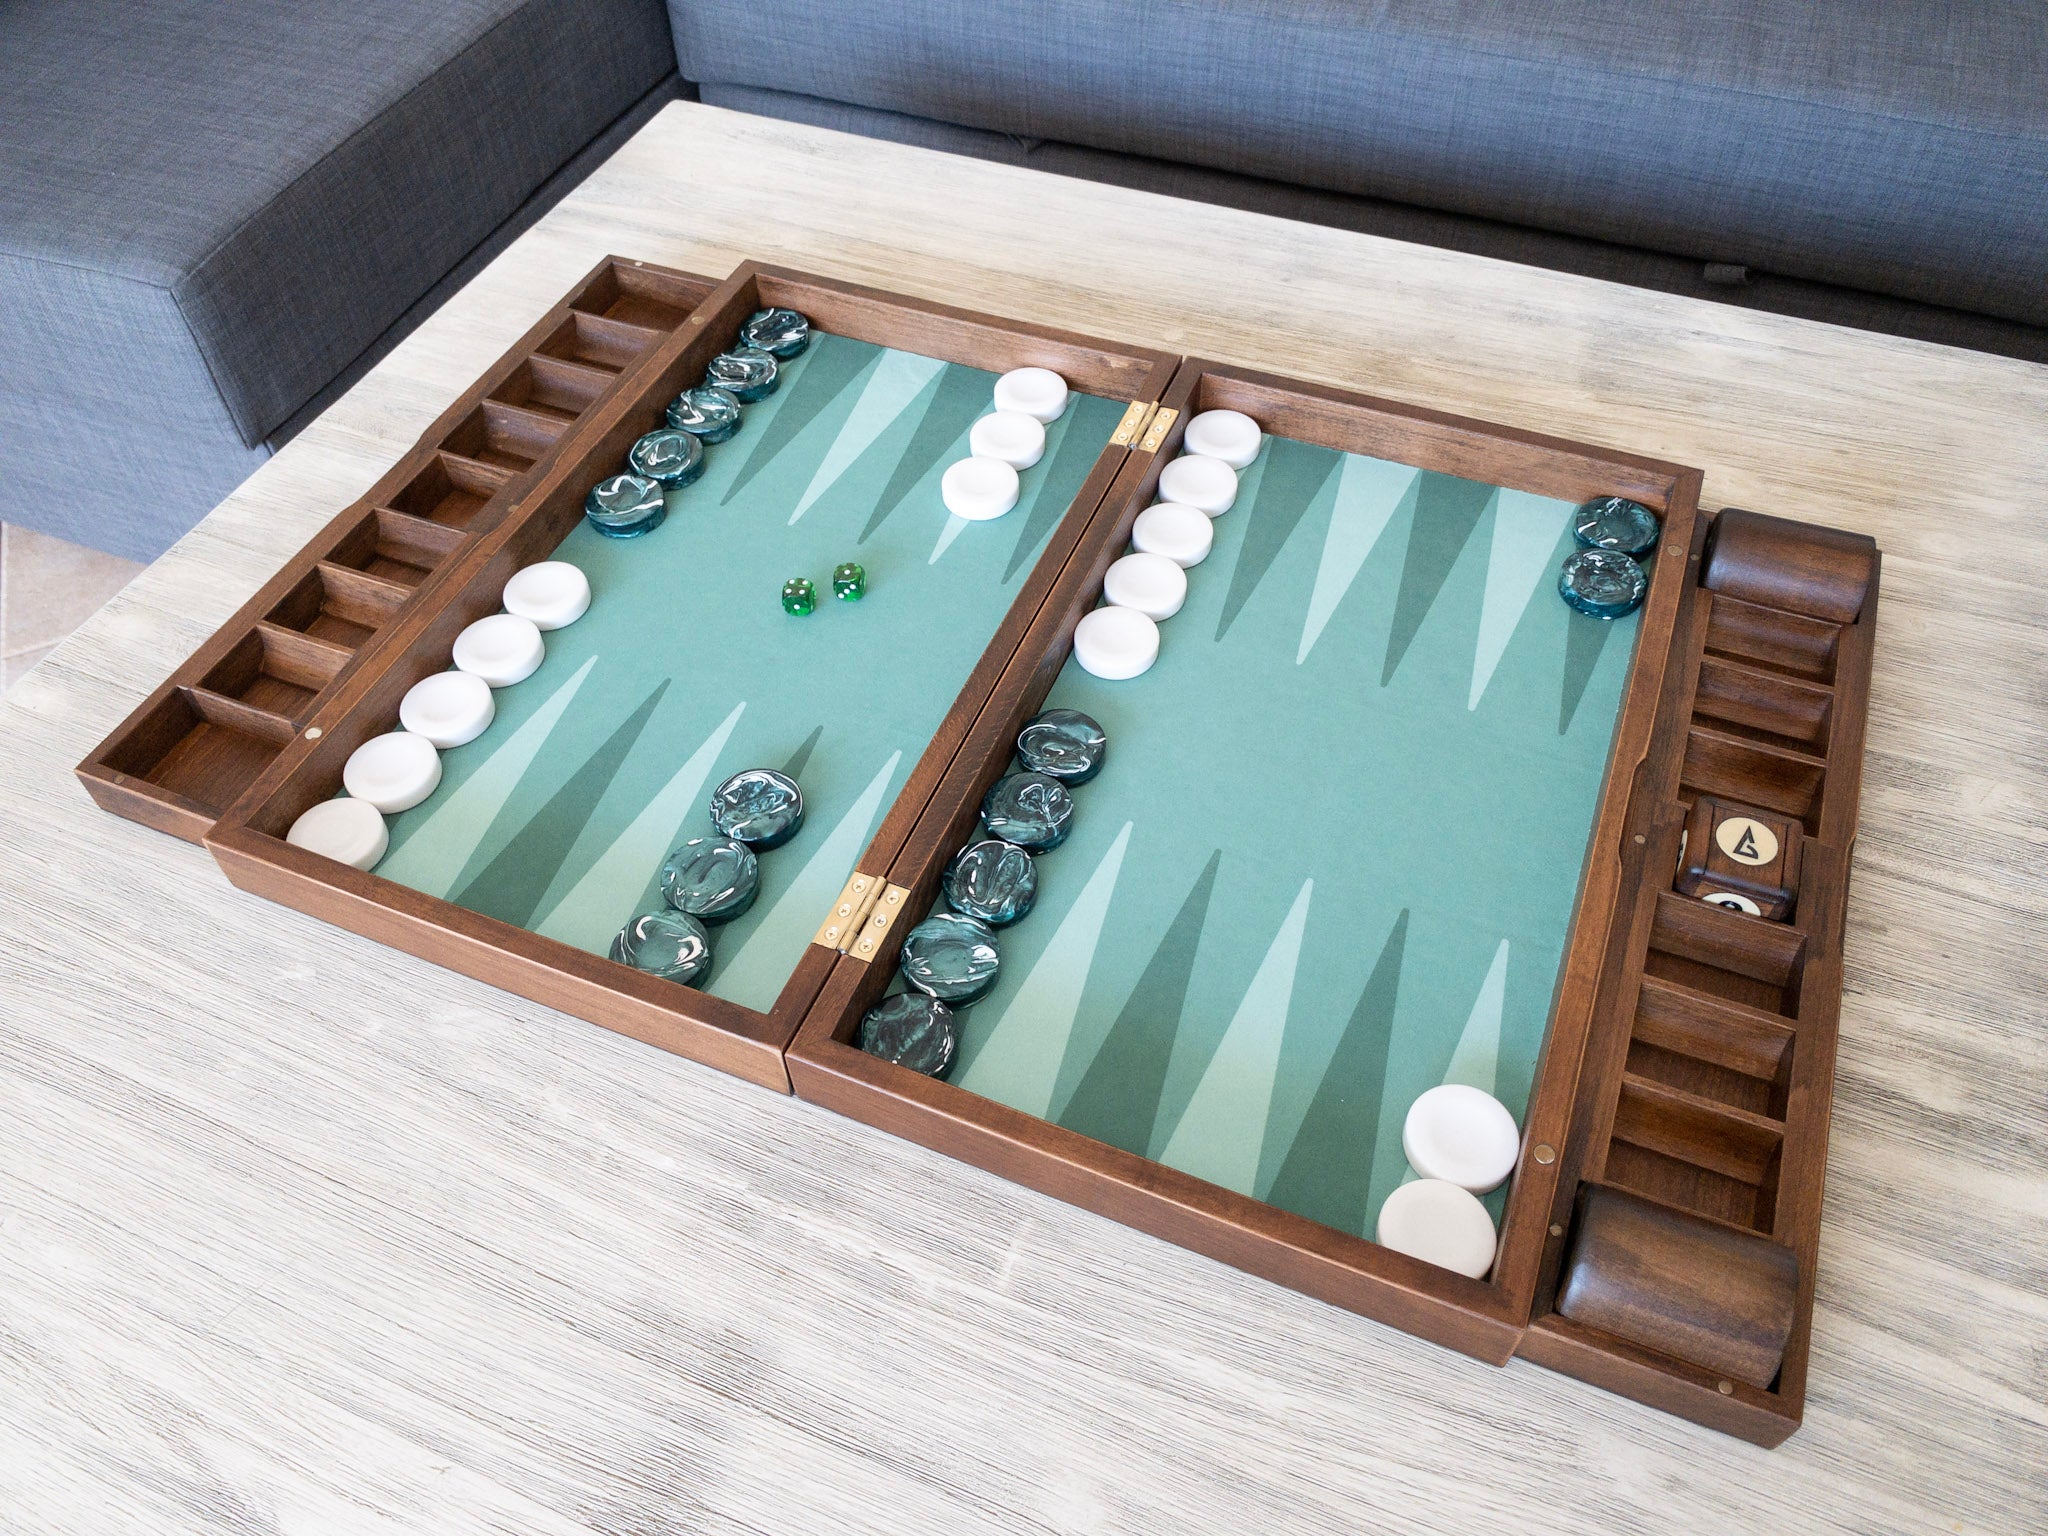 Review of the Backgammon Galaxy “Earth” Backgammon Set